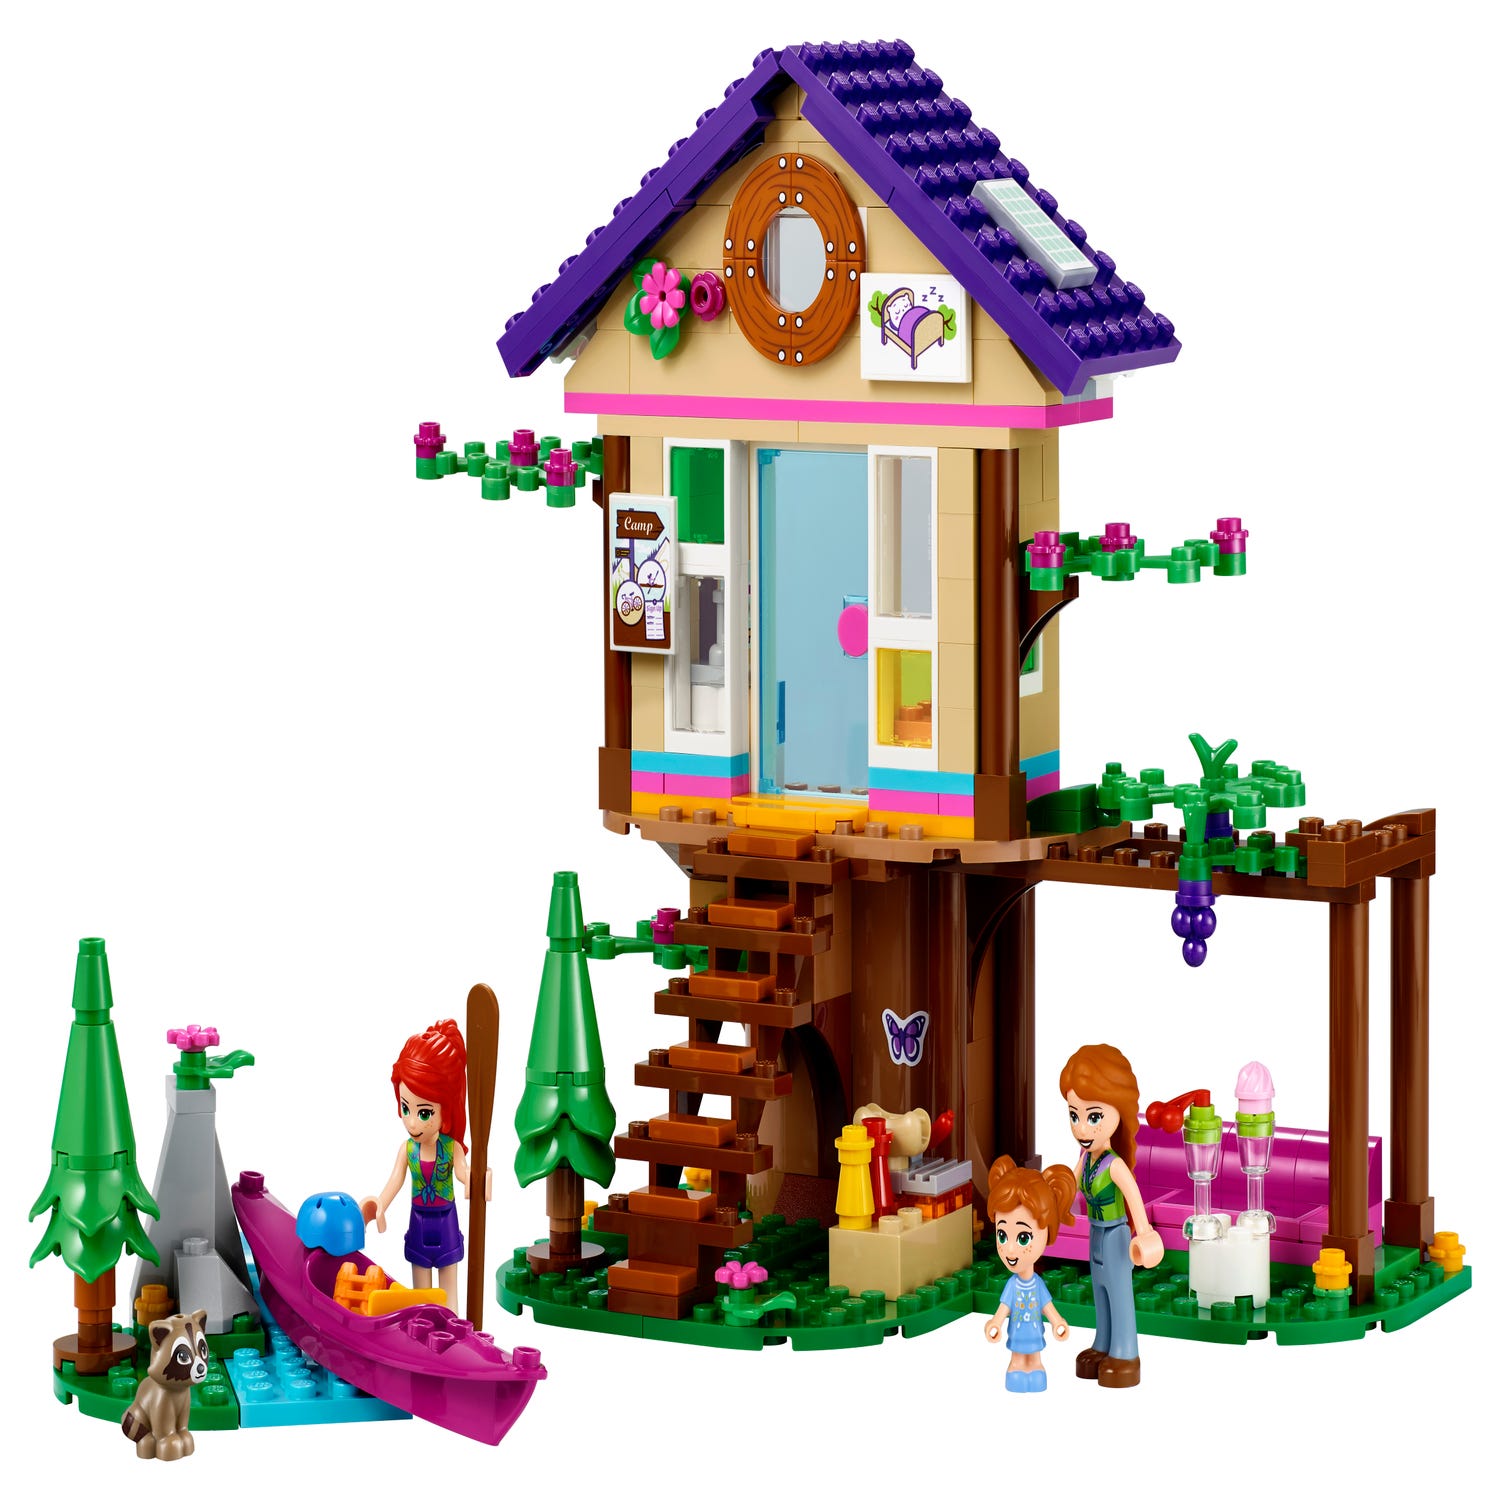 LEGO Friends Mia's Tree House Building Set - wide 3